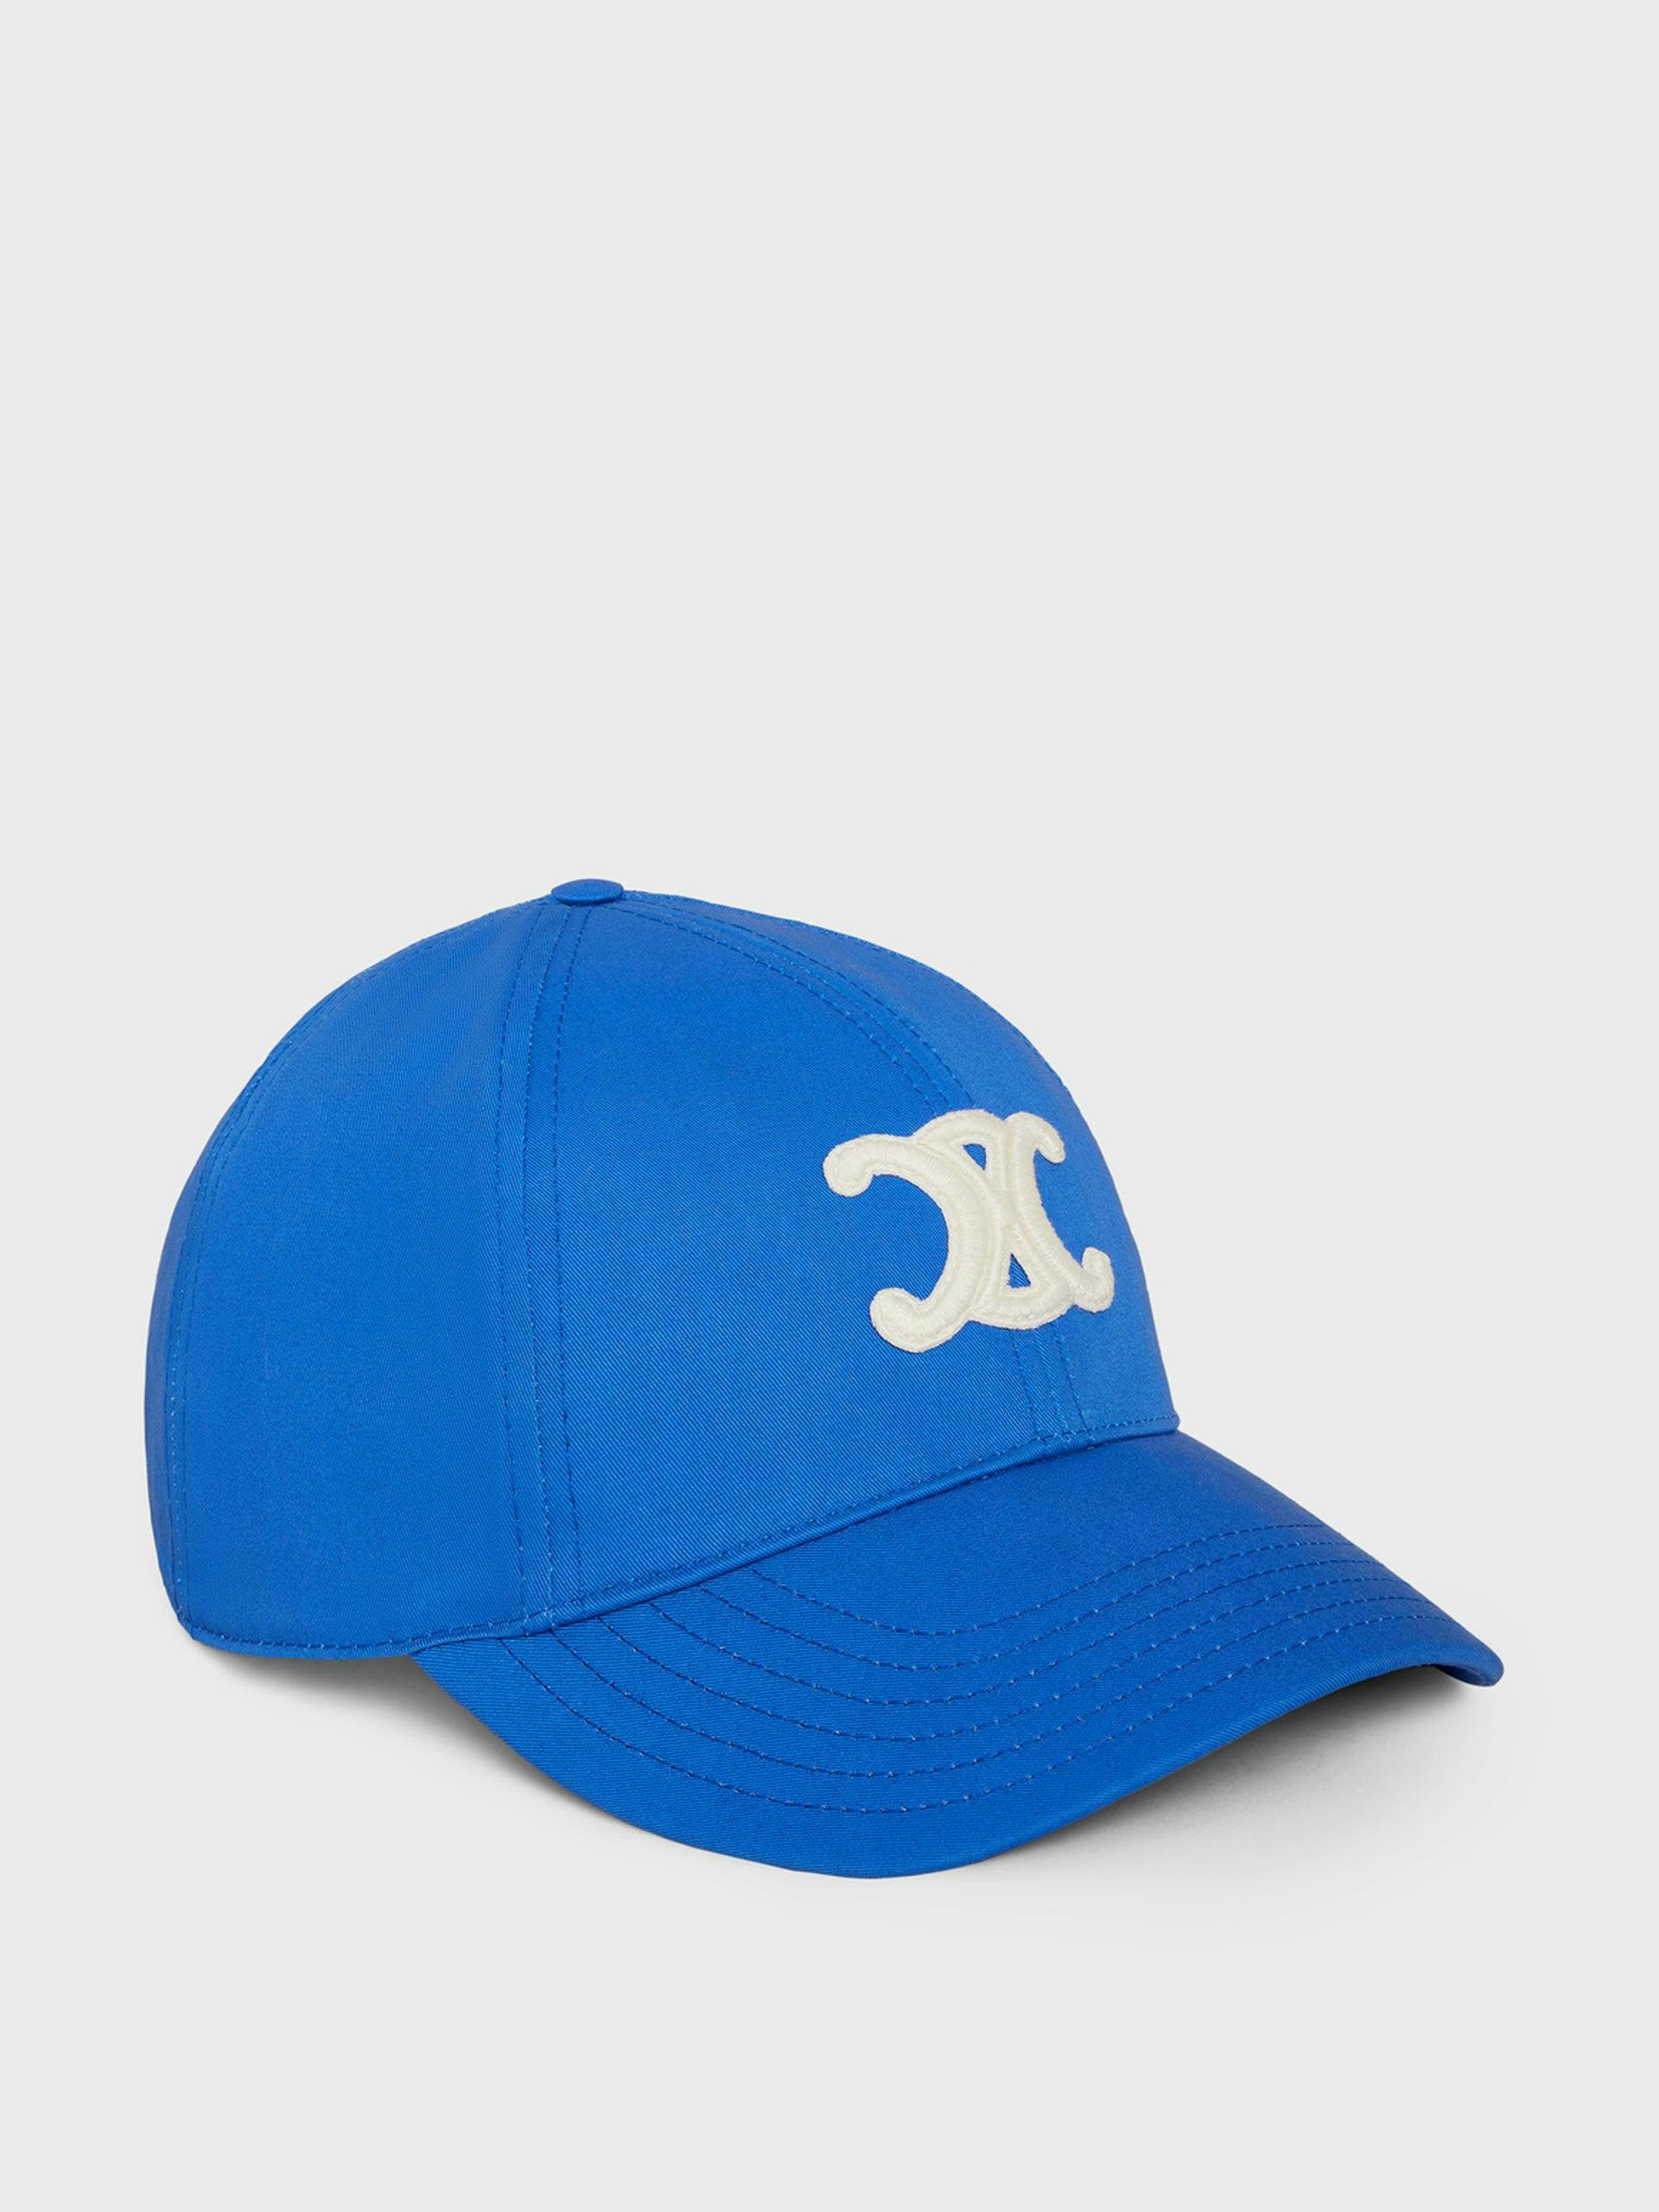 Electric blue baseball cap